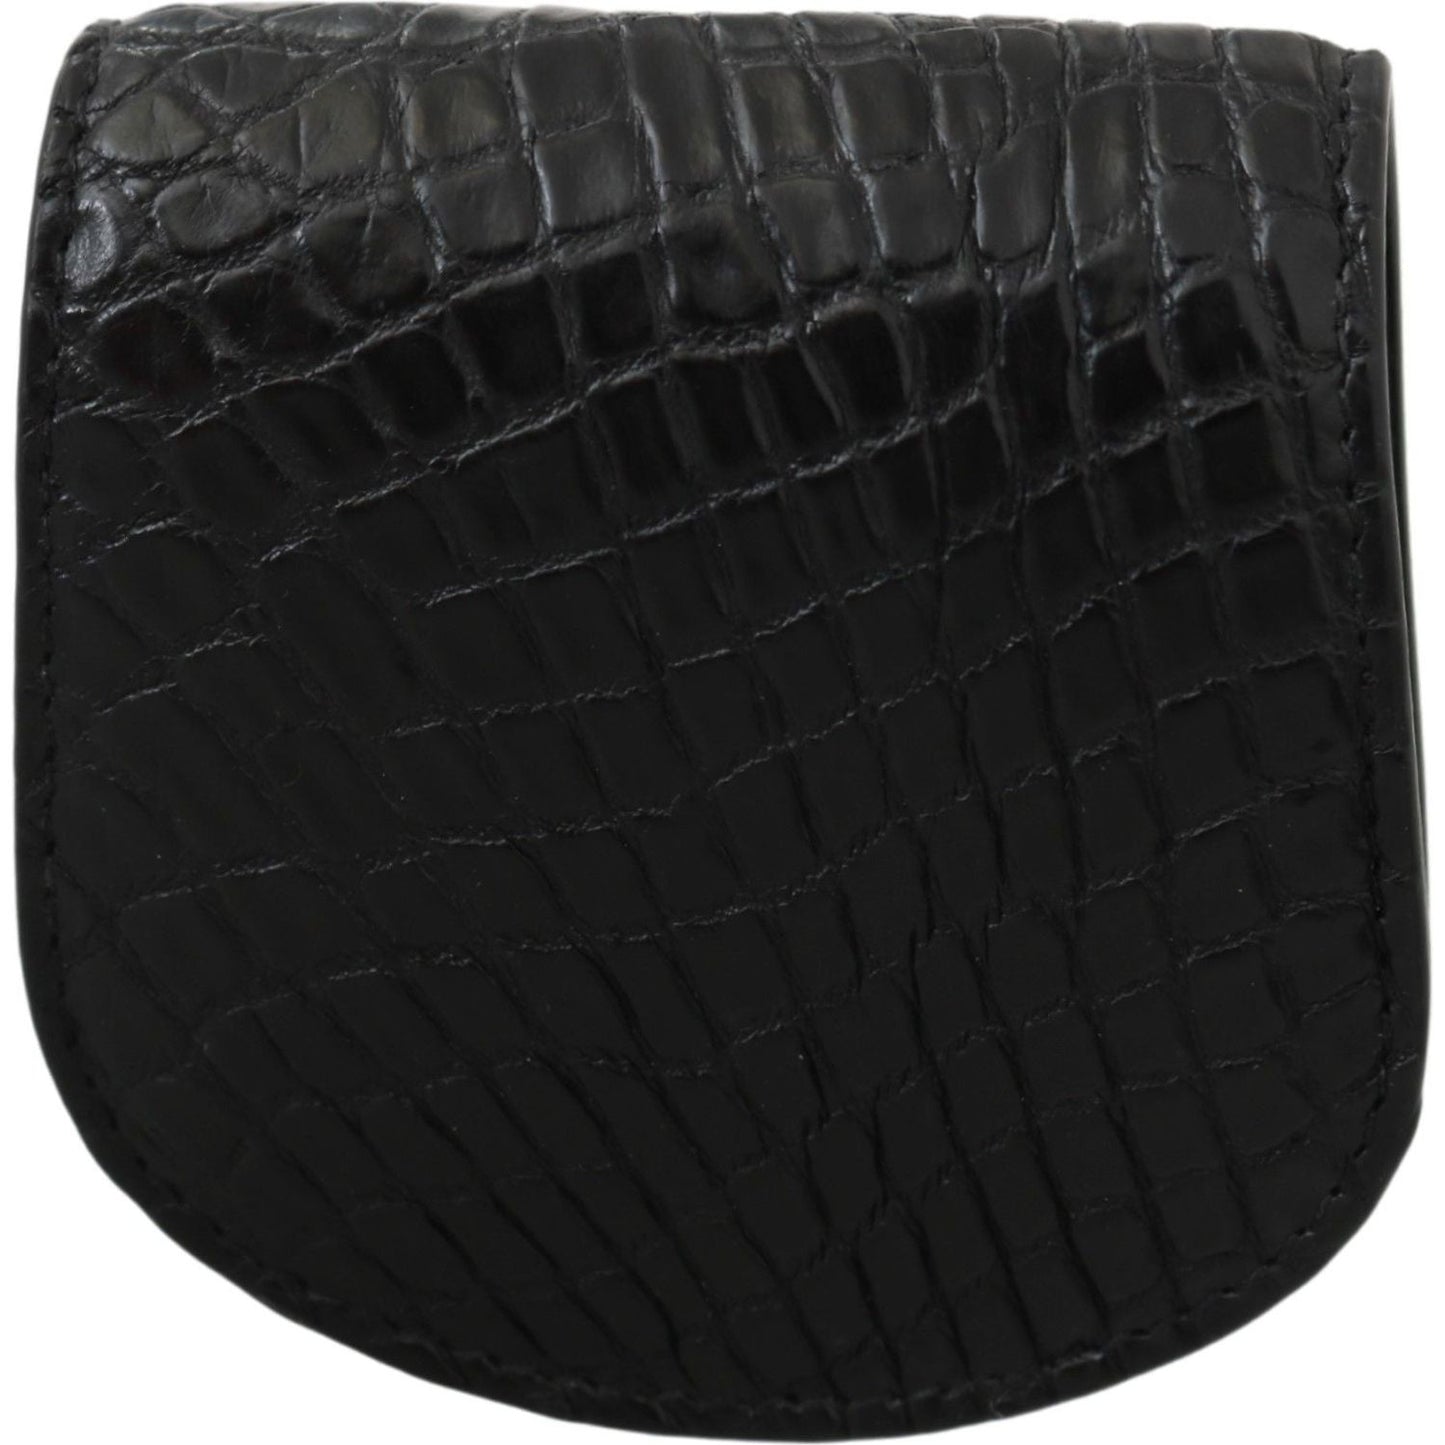 Dolce & Gabbana Sleek Black Leather Coin Case Wallet Condom Case black-exotic-skin-pocket-condom-case-holder